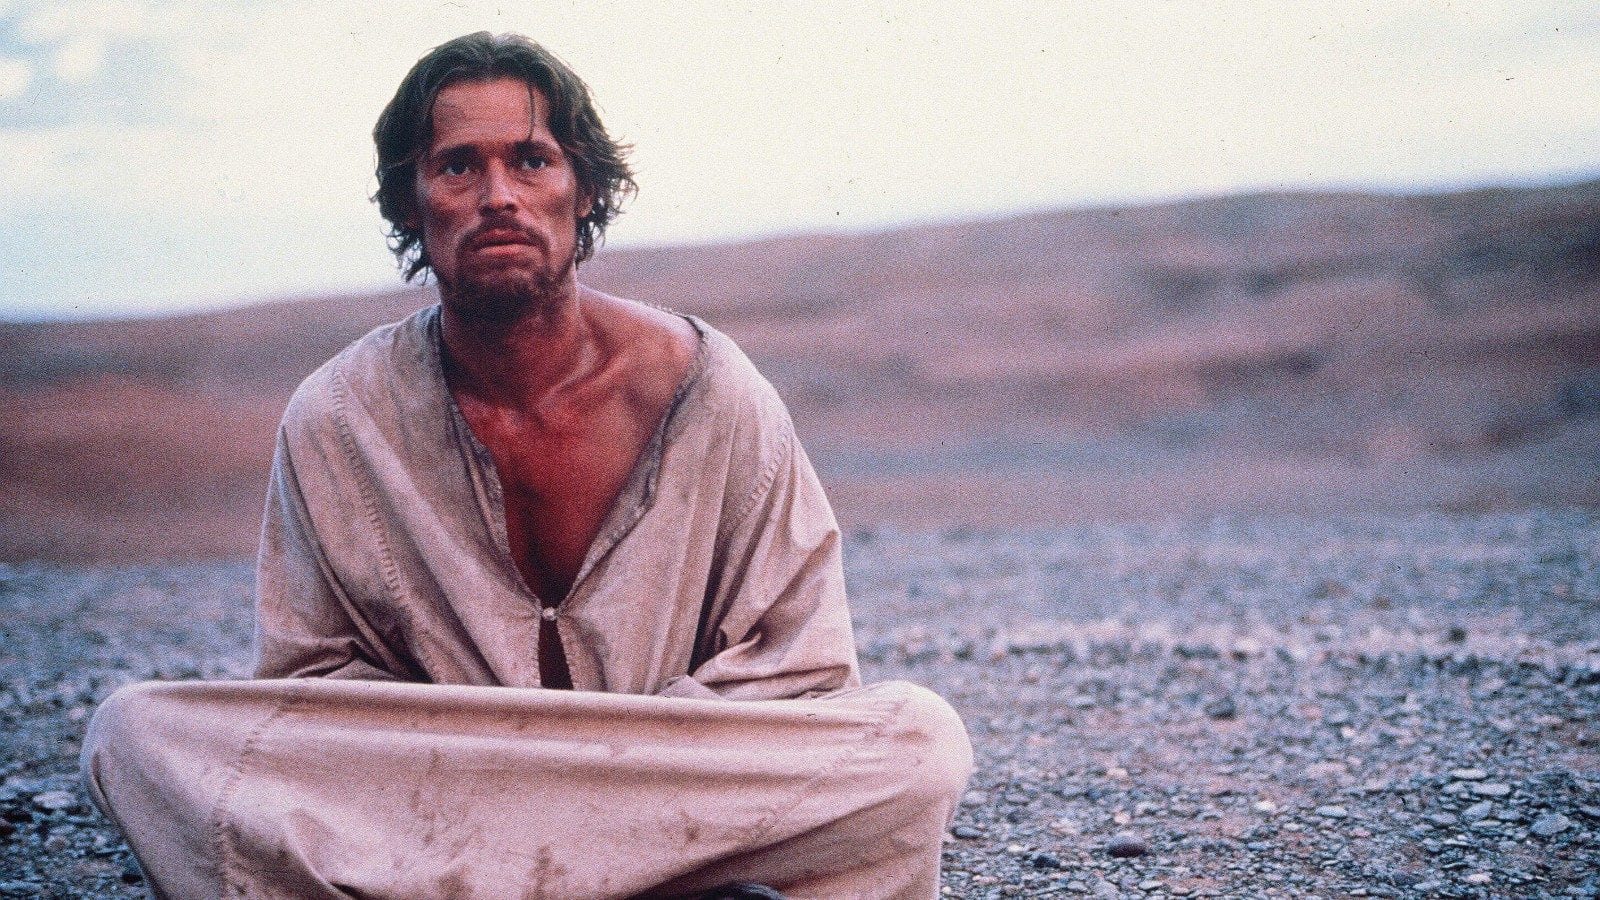 Jesus, looking haggard, sits alone in the desert